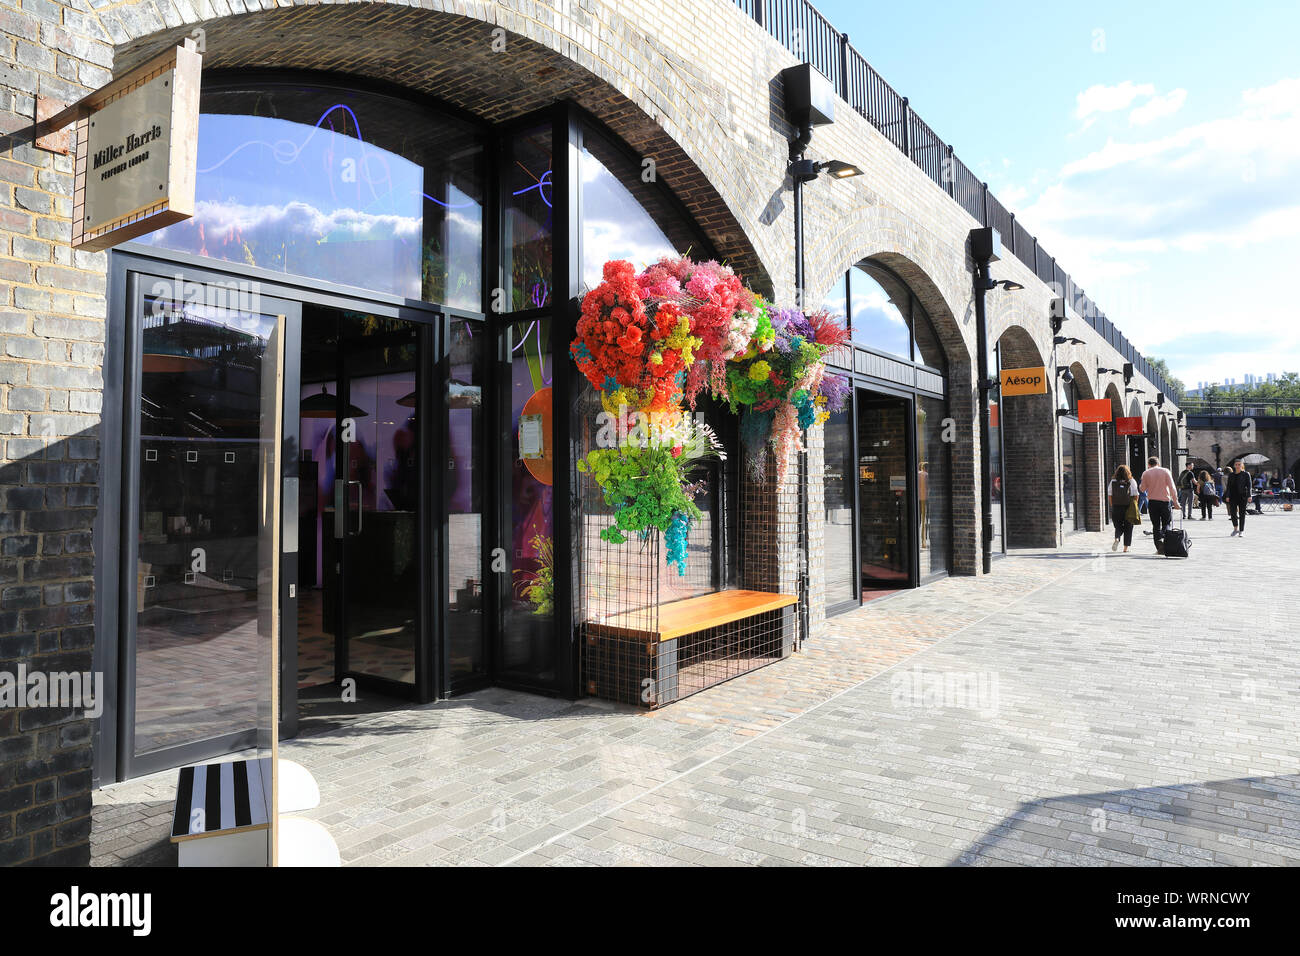 Miller Harris perfume shop on Yard Level at Coal Drop Yards at Kings Cross, in north London, UK Stock Photo